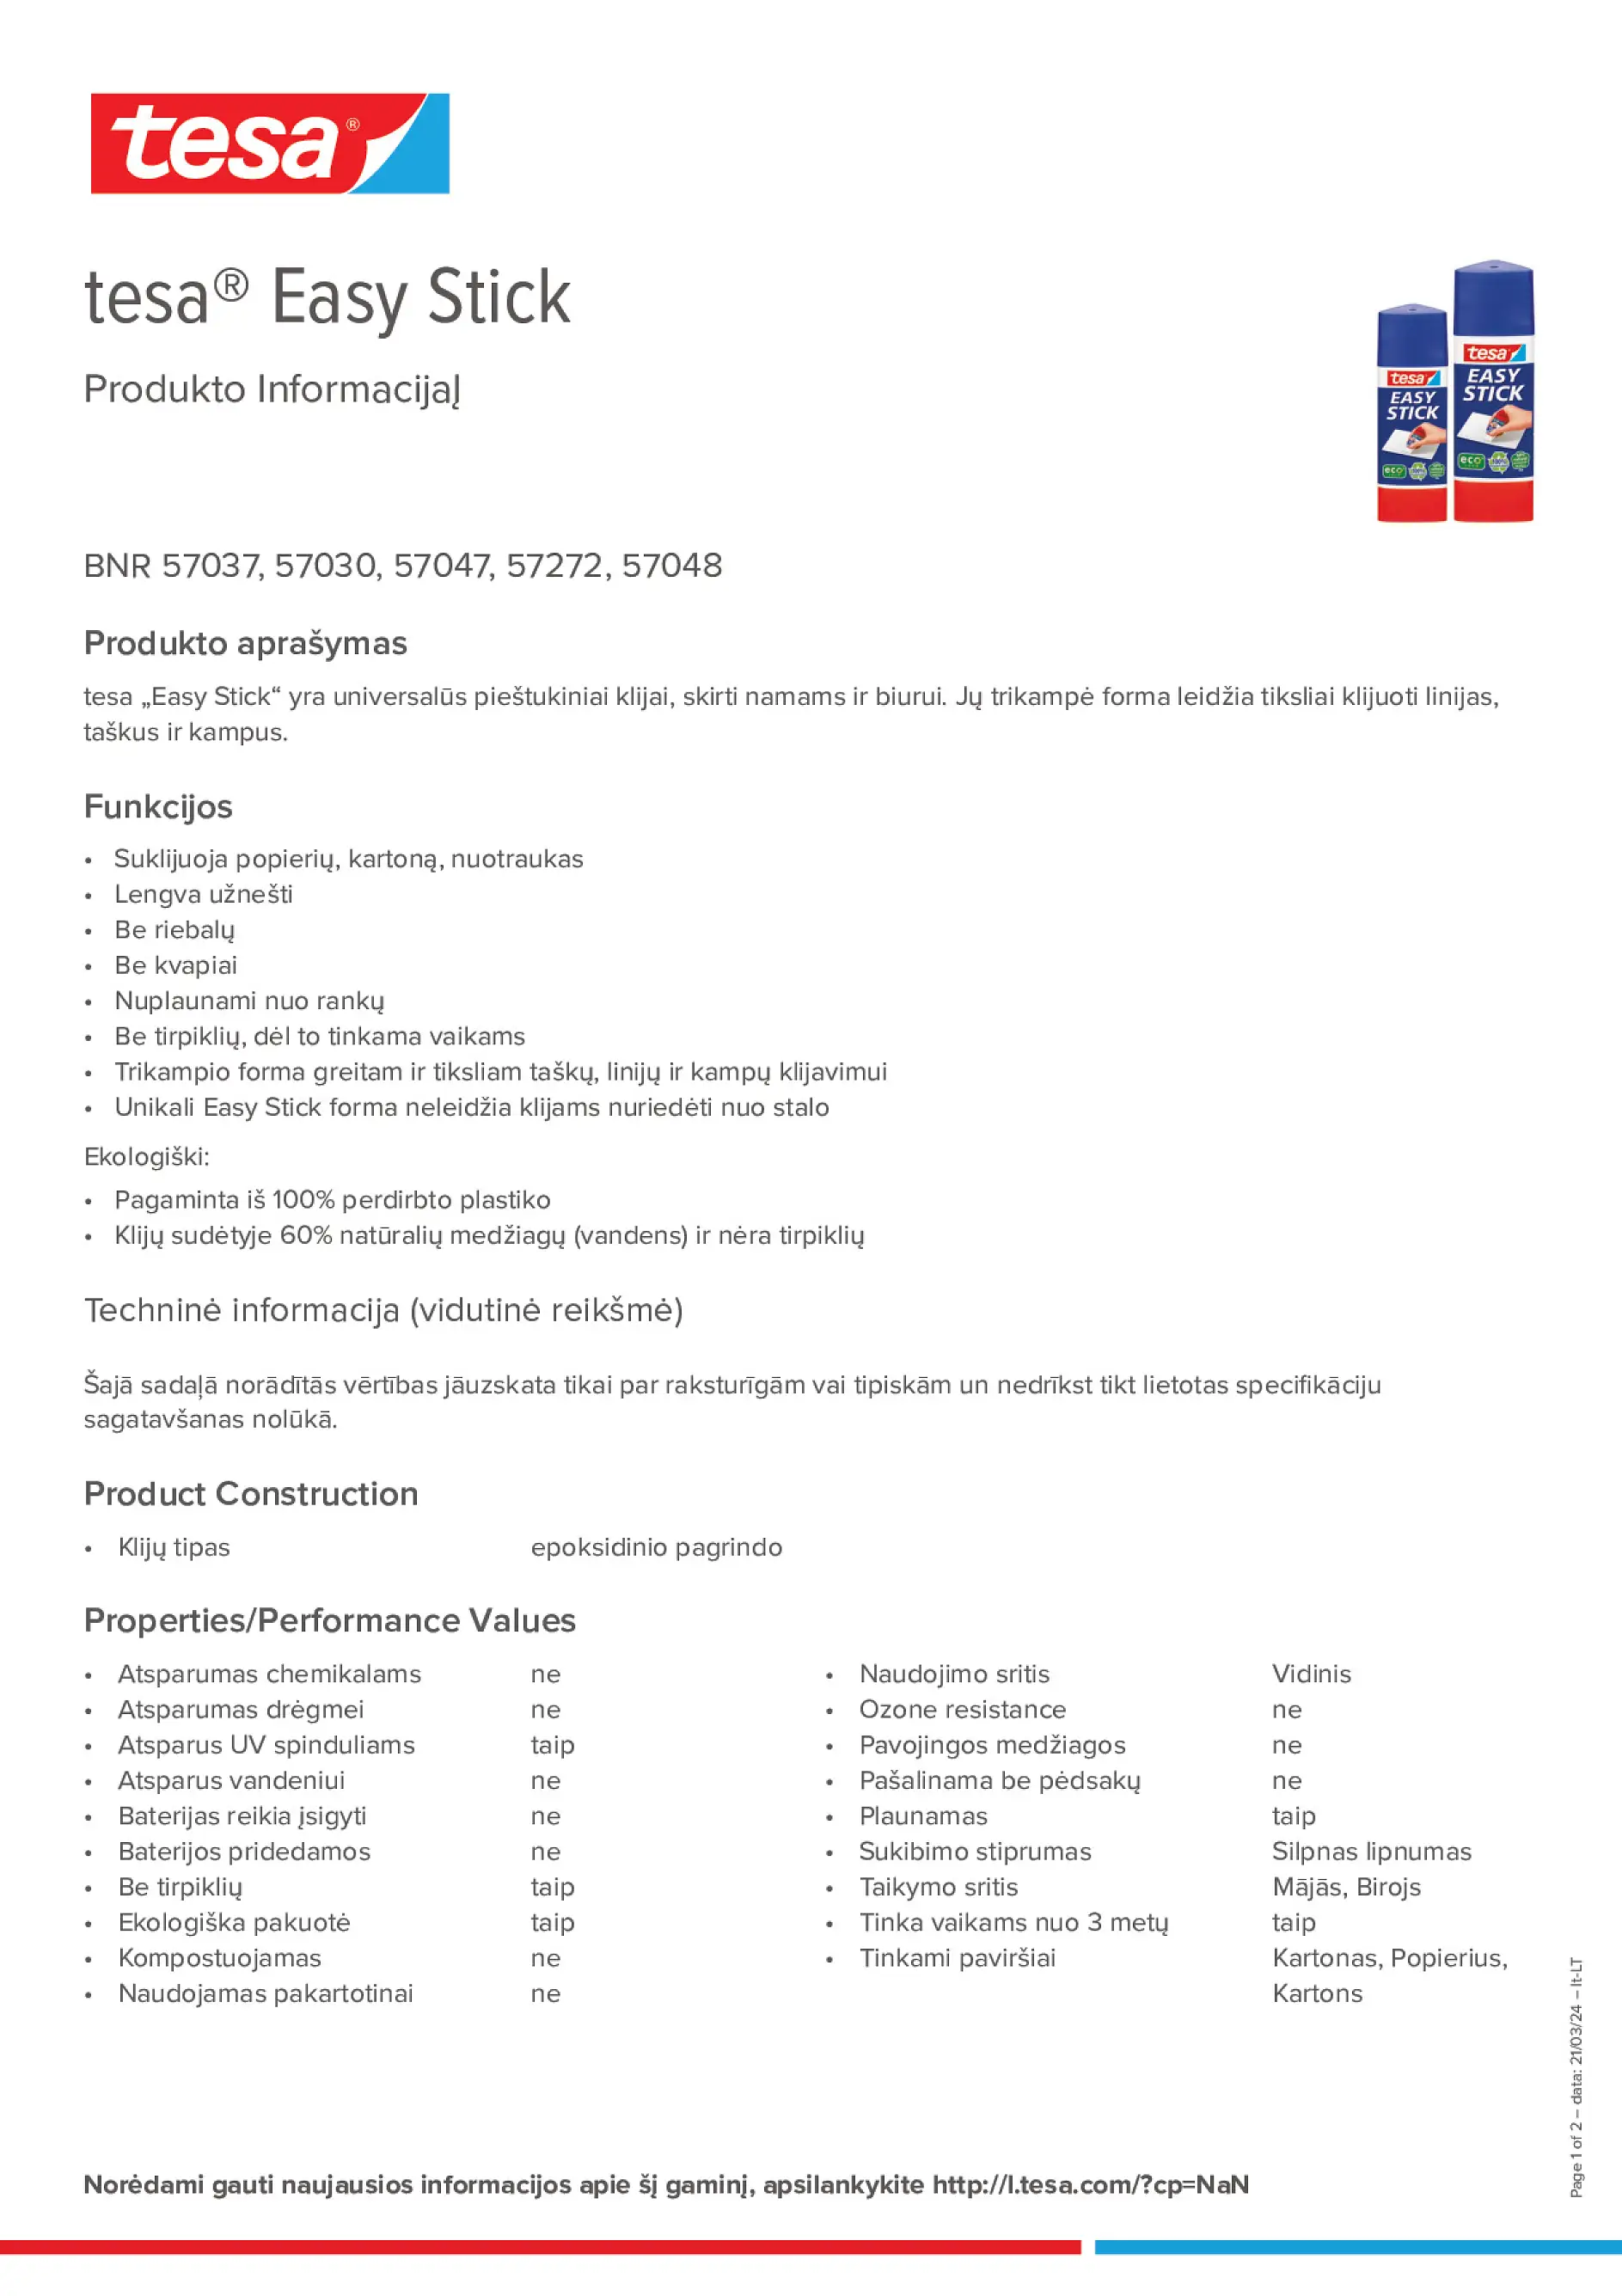 Product information_tesa® 57272_lt-LT